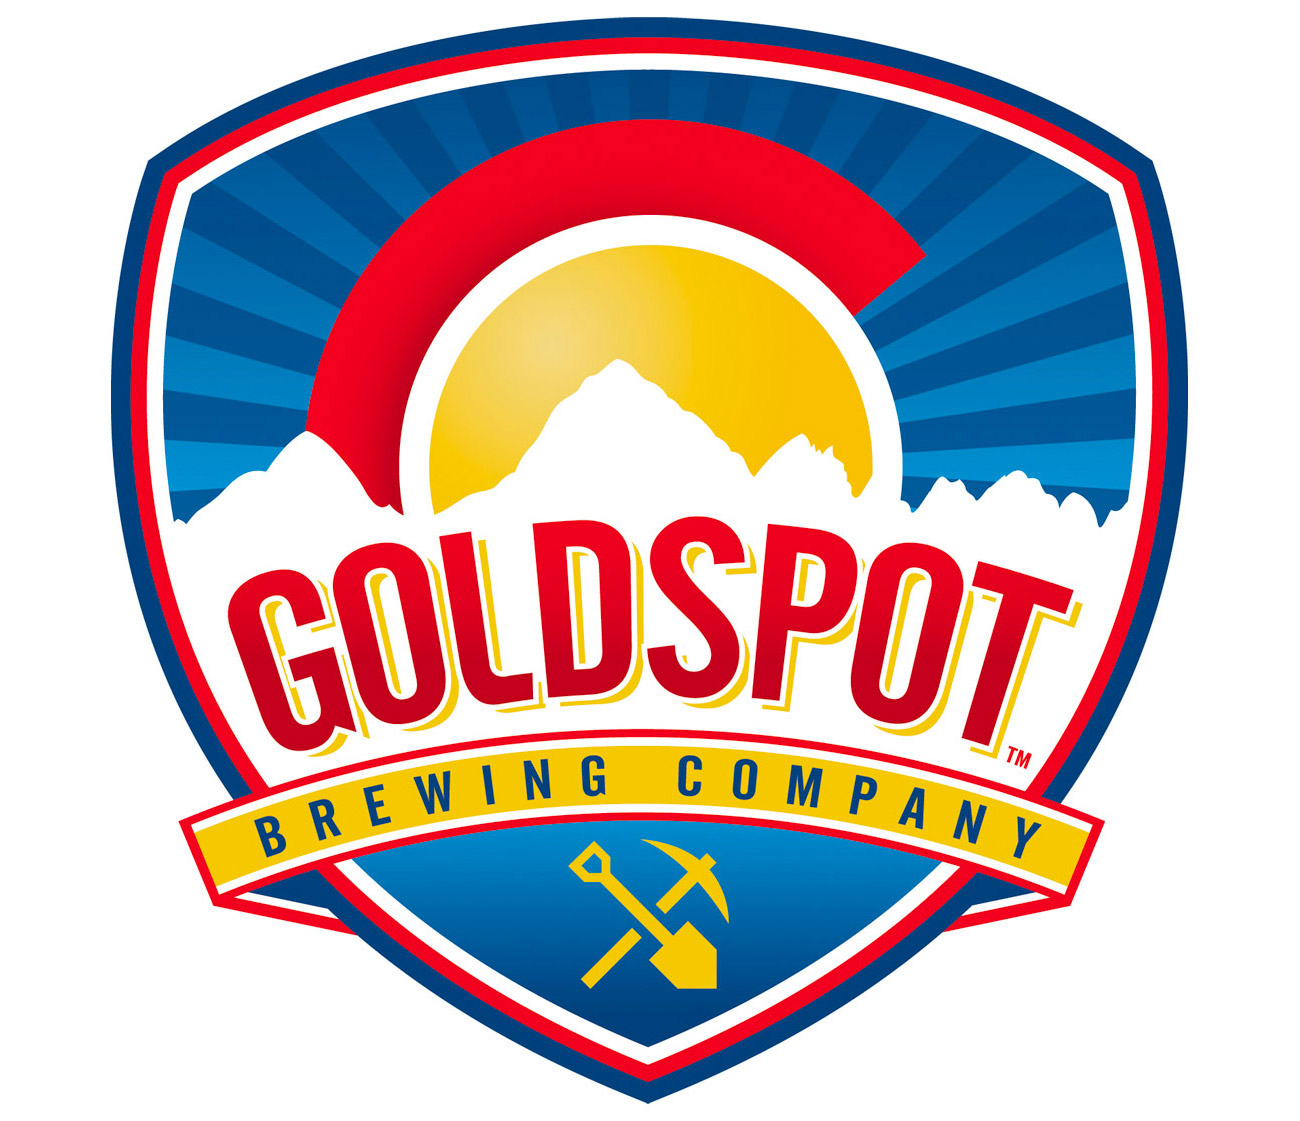 Goldspot-Brewing-Company-Branding-1920px-mobile